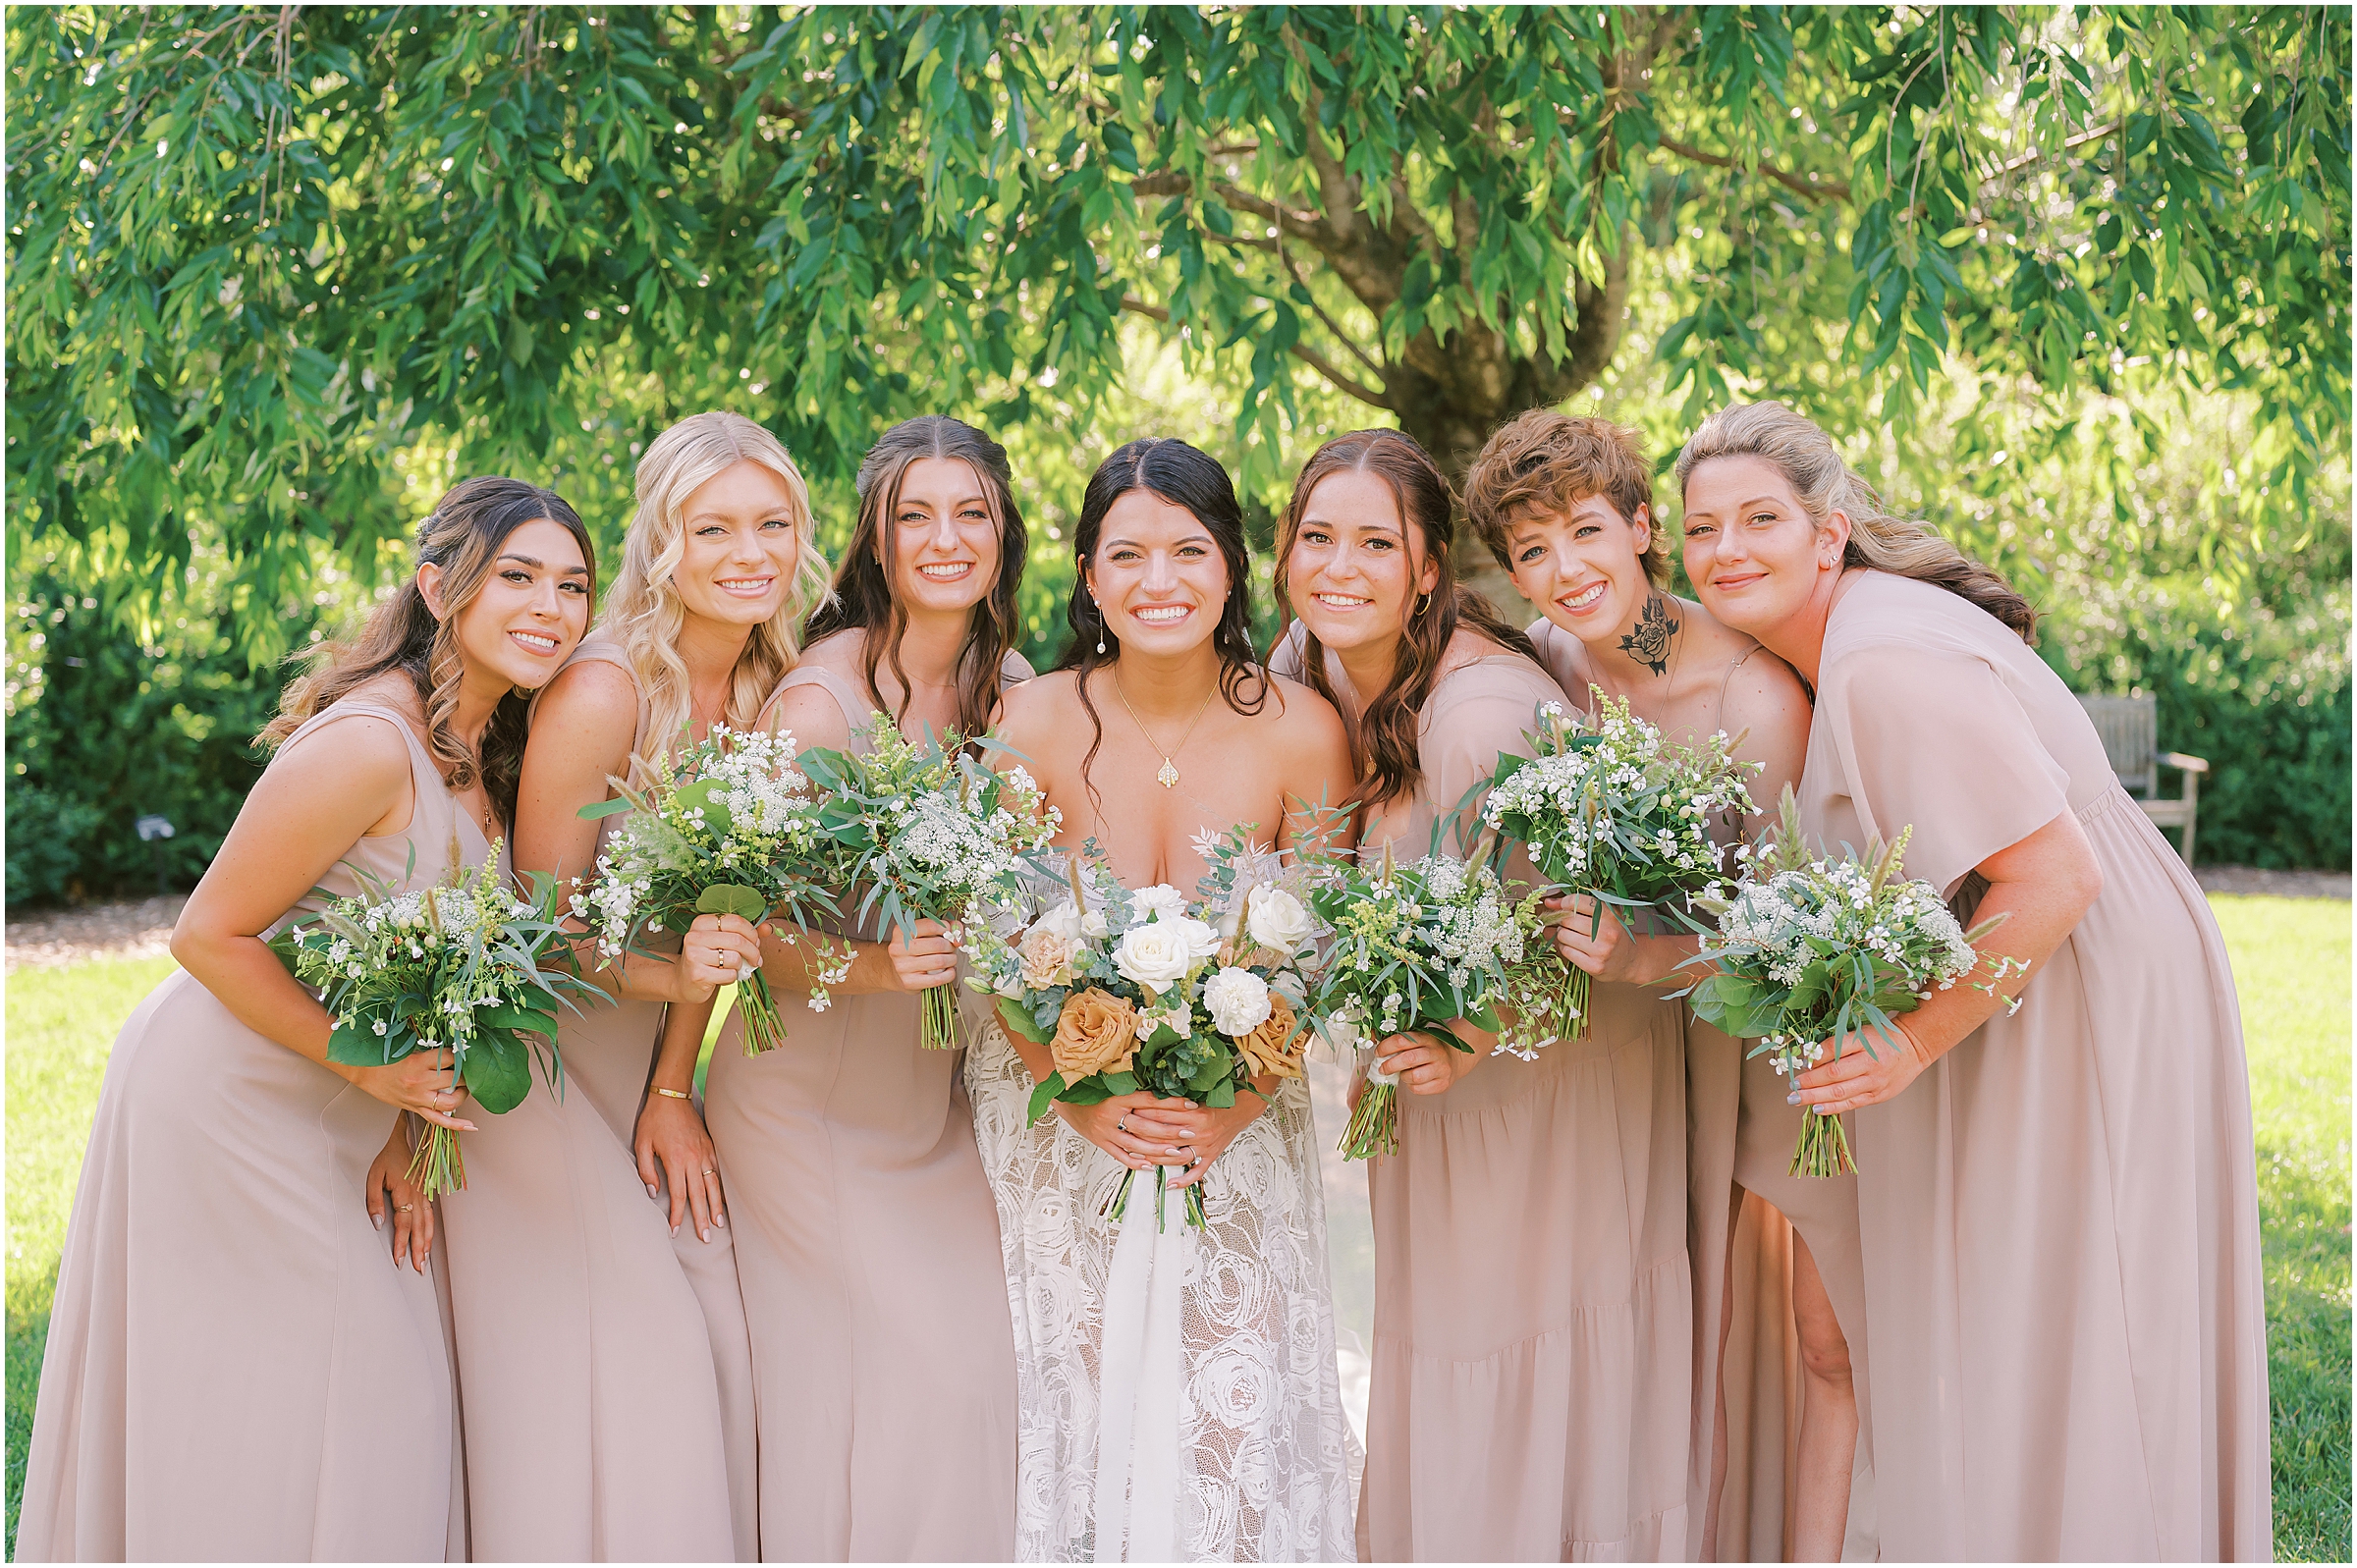 Bride and bridesmaids in blush pink bridesmaid dresses